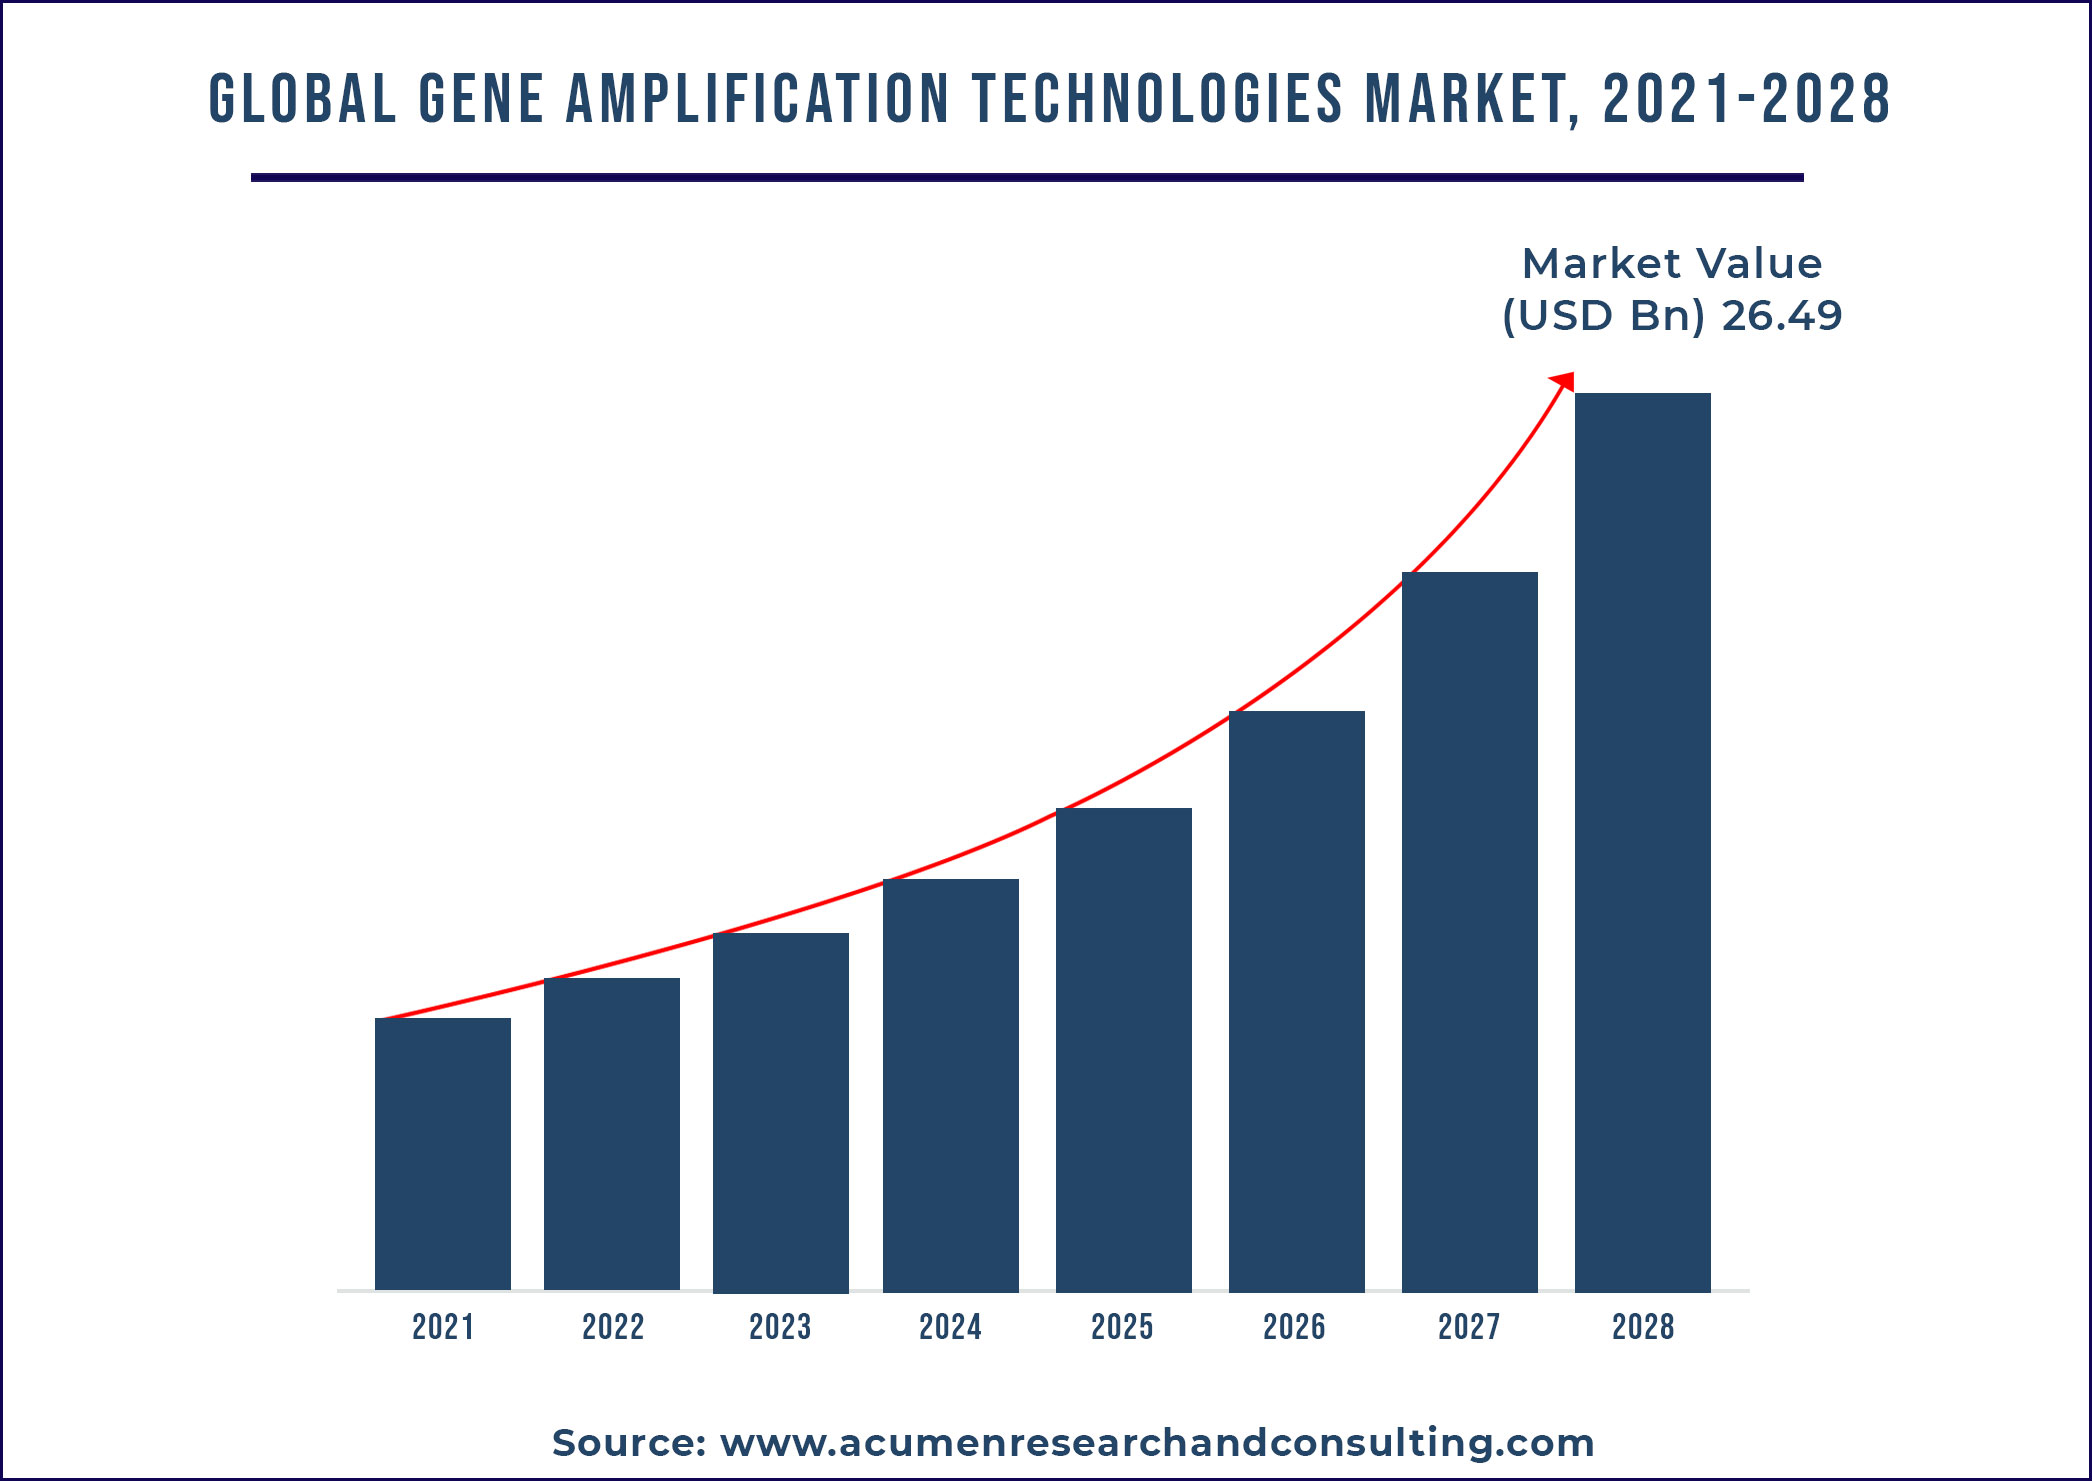 Global Gene Amplification Technologies Market Size 2021-2028